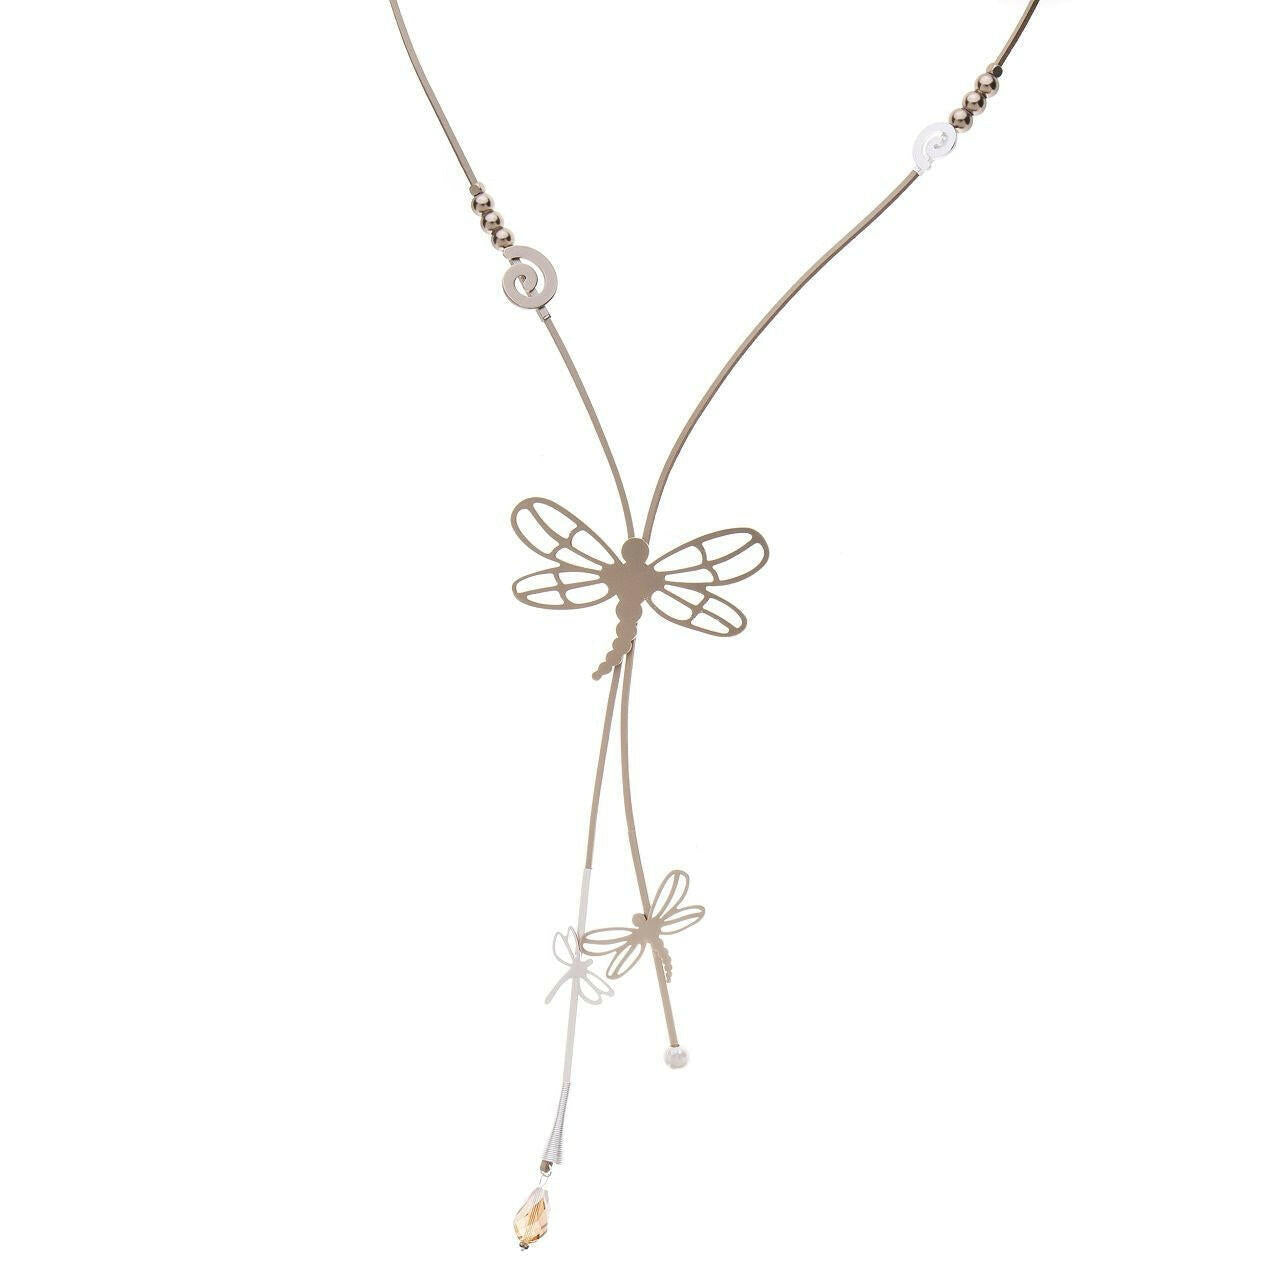 Halskette-Libelle-Perle